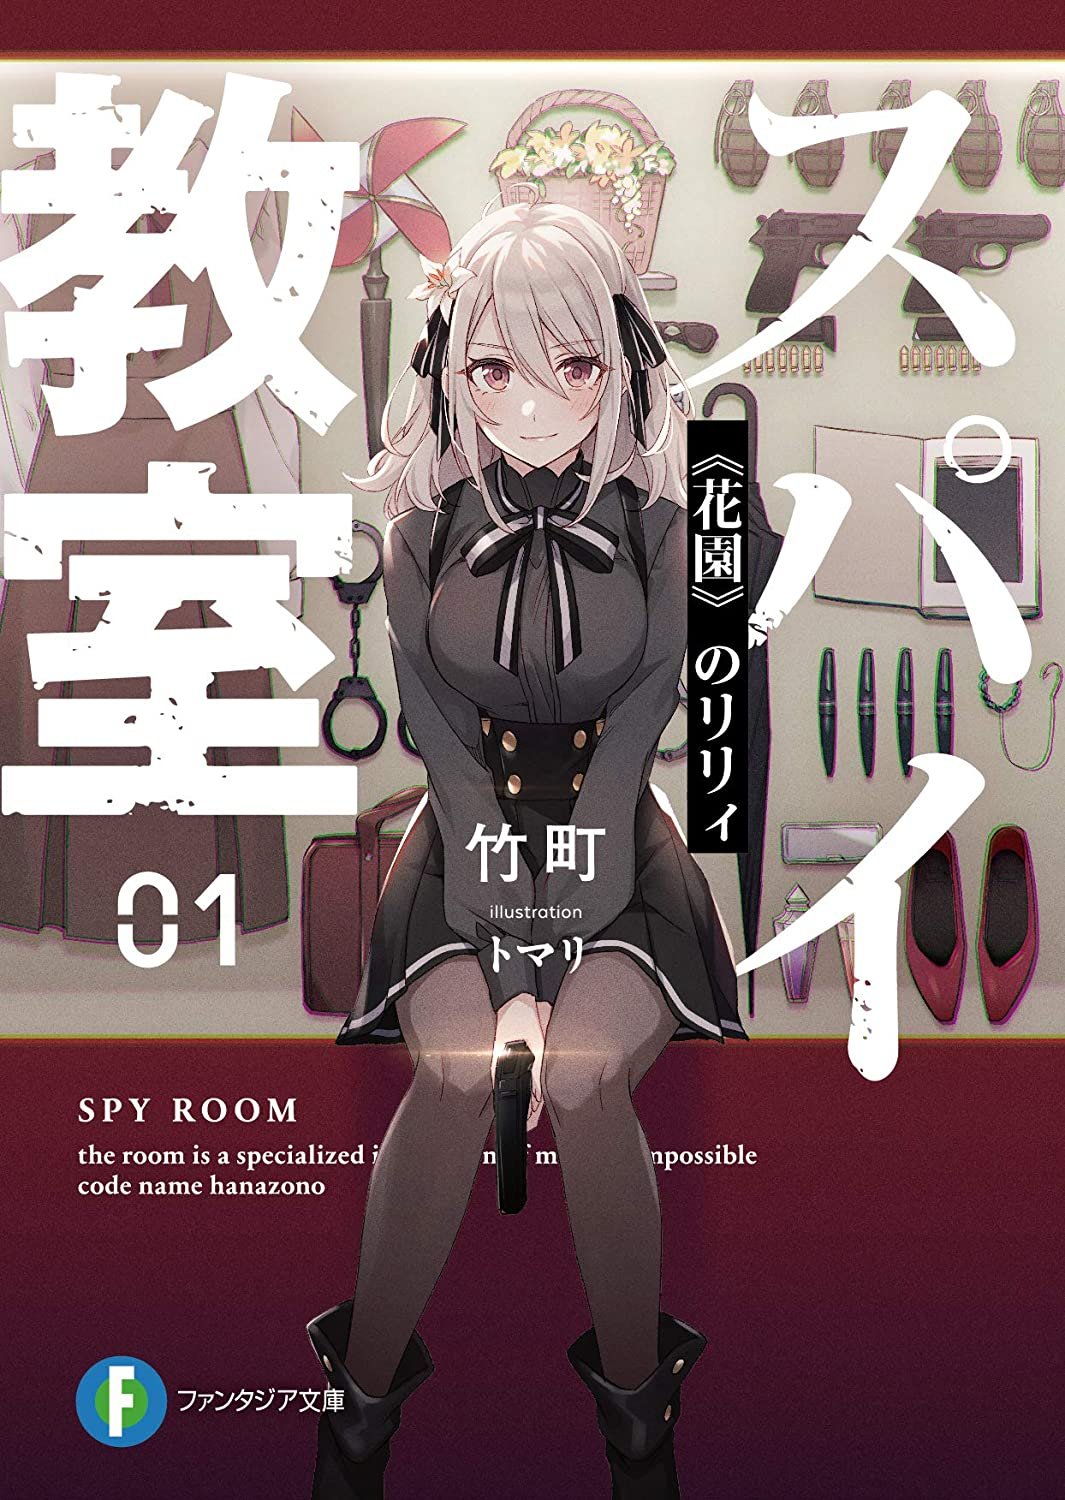 Manga Mogura RE on X: Light Novel Series Spy kyoushitsu (Spy Classroom)  by Takemachi, Tomari has 1.1 million copies (including manga, spin-off,  digital) in circulation.  / X